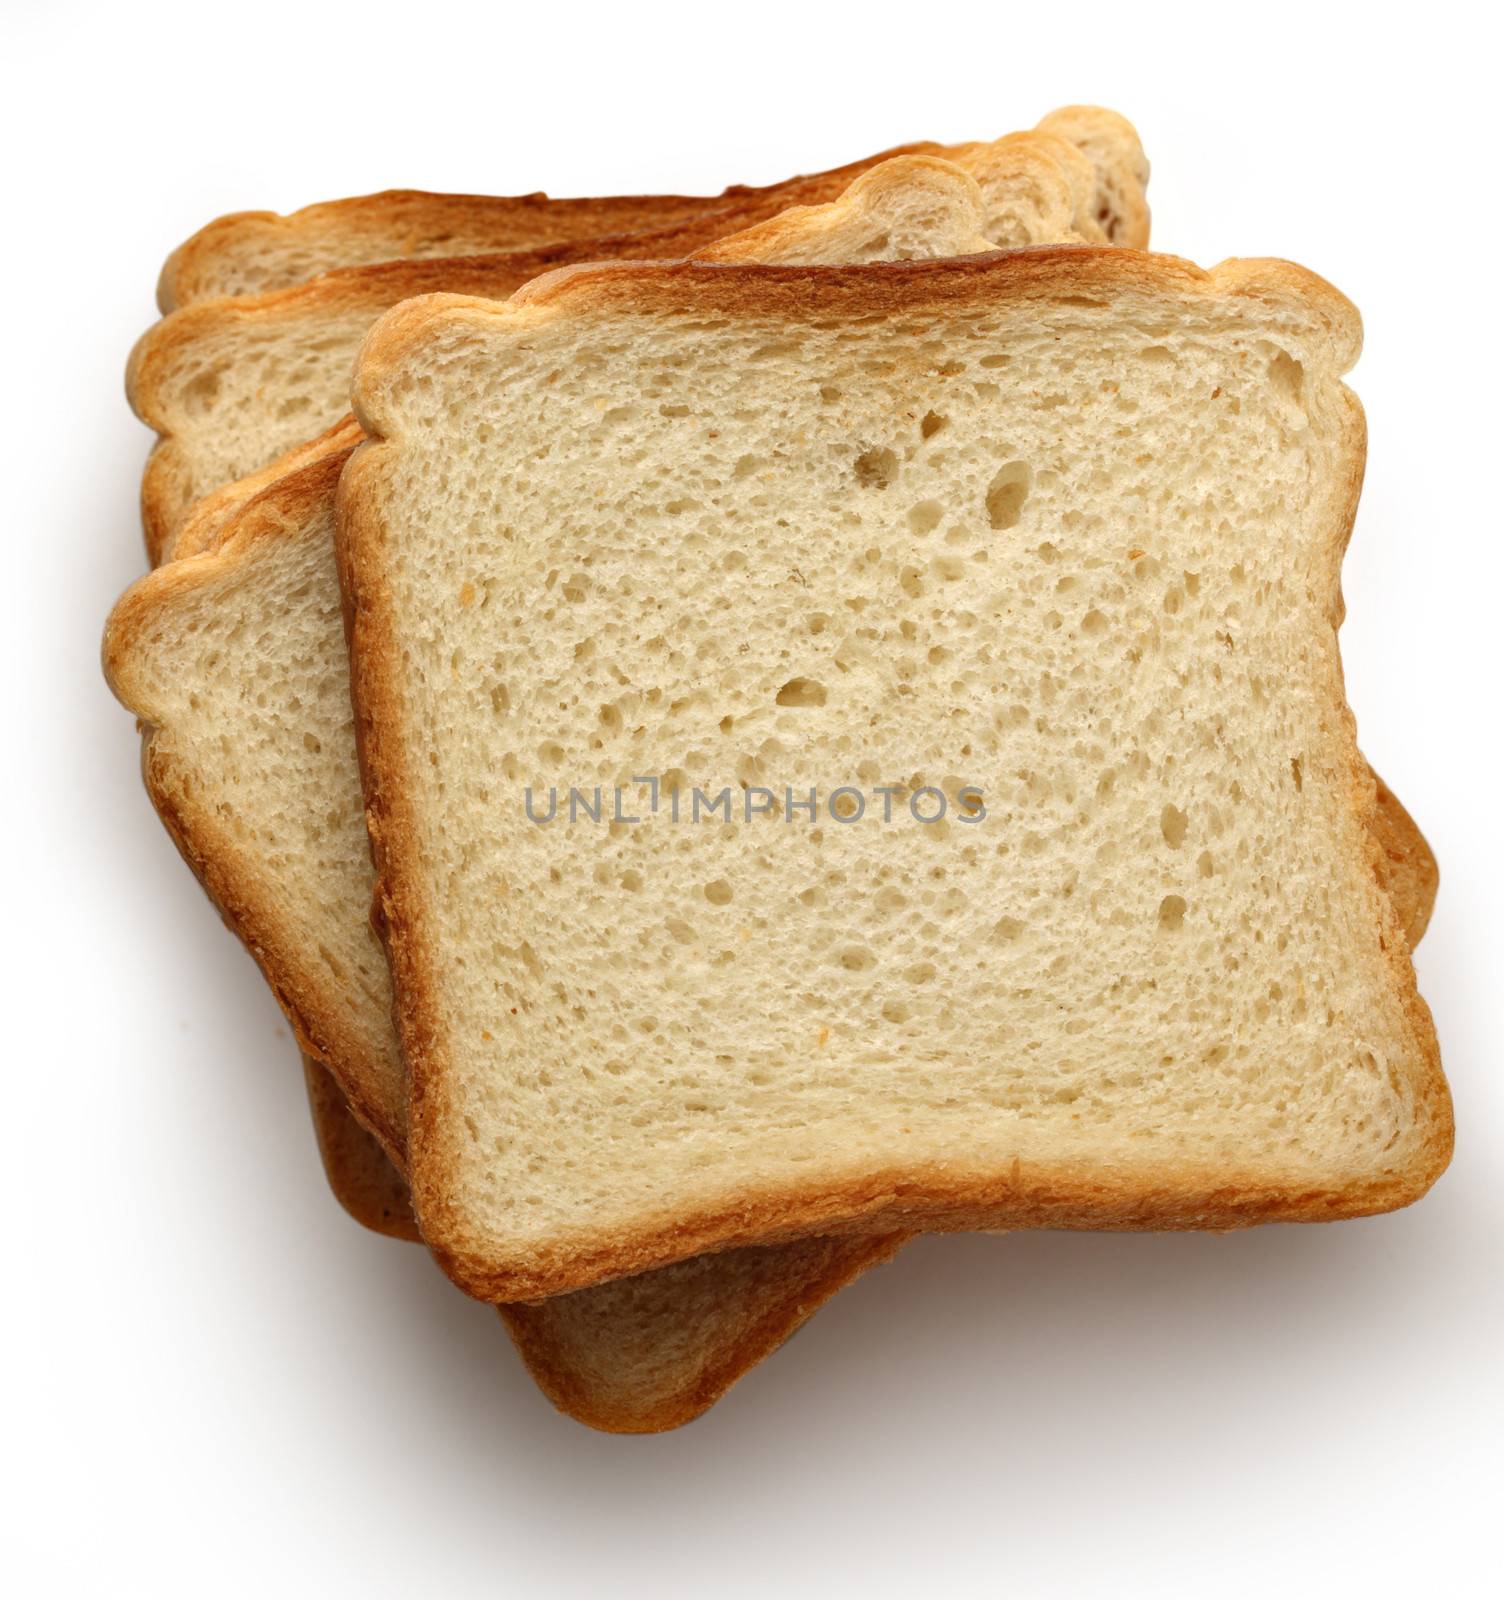 Bread slices on white background